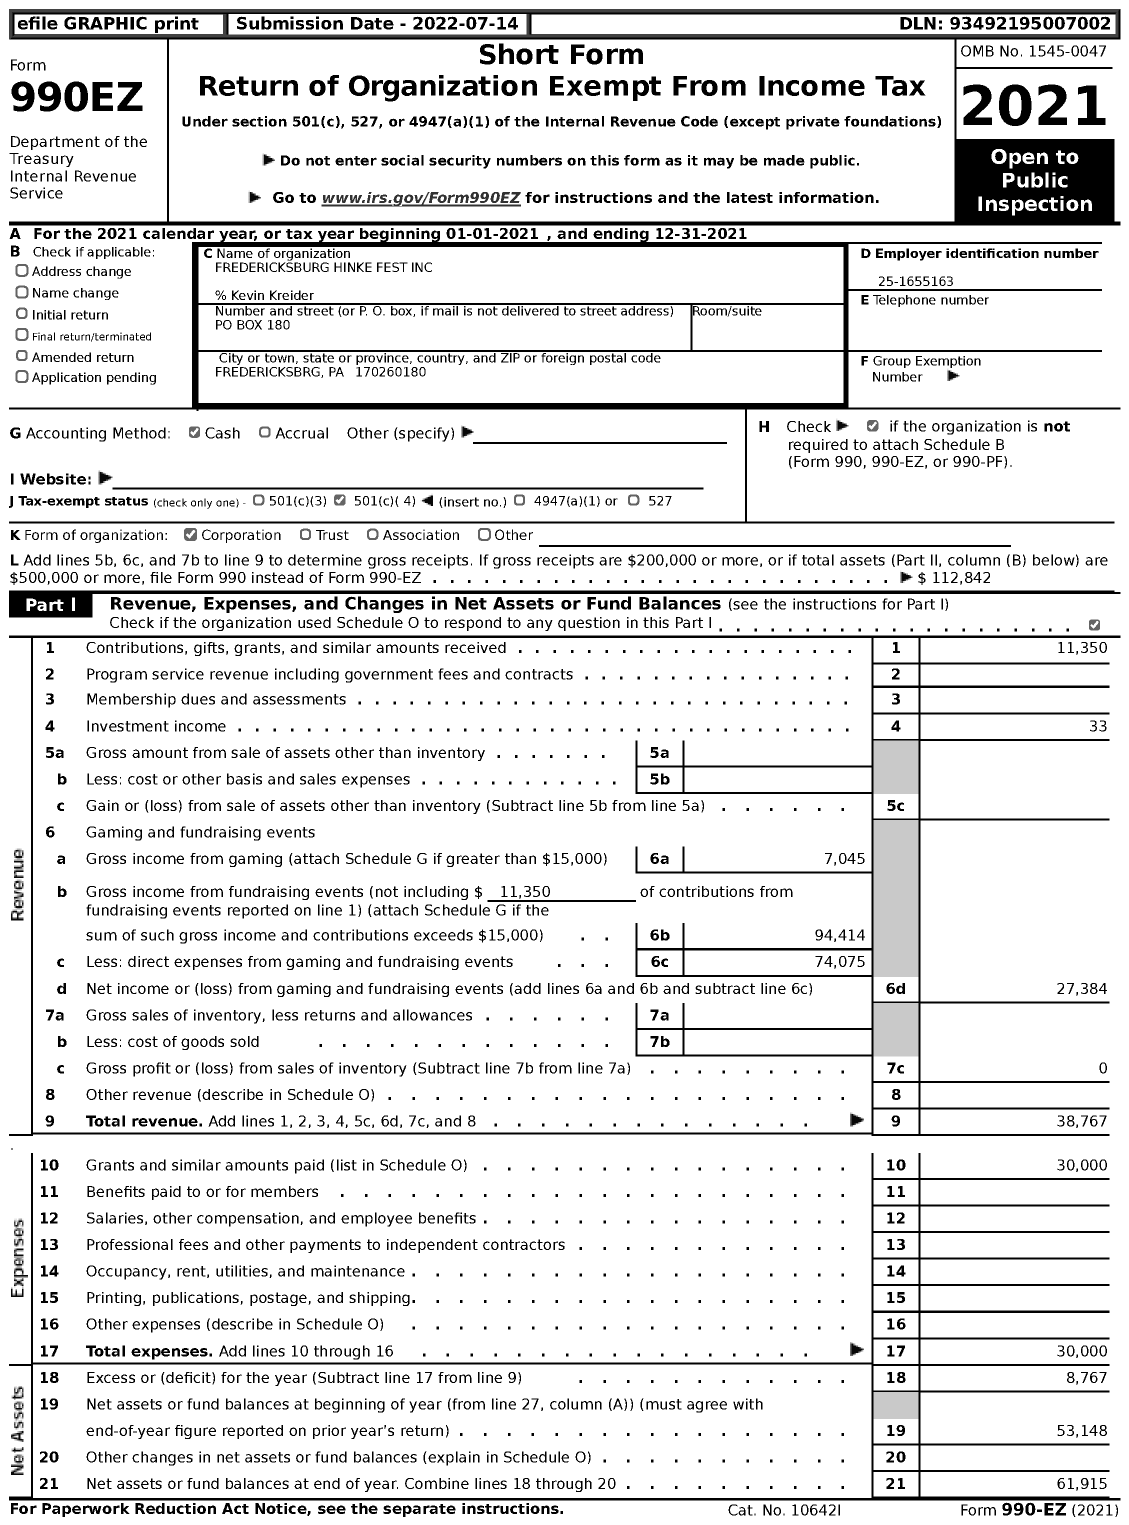 Image of first page of 2021 Form 990EZ for Fredericksburg Hinkelfest